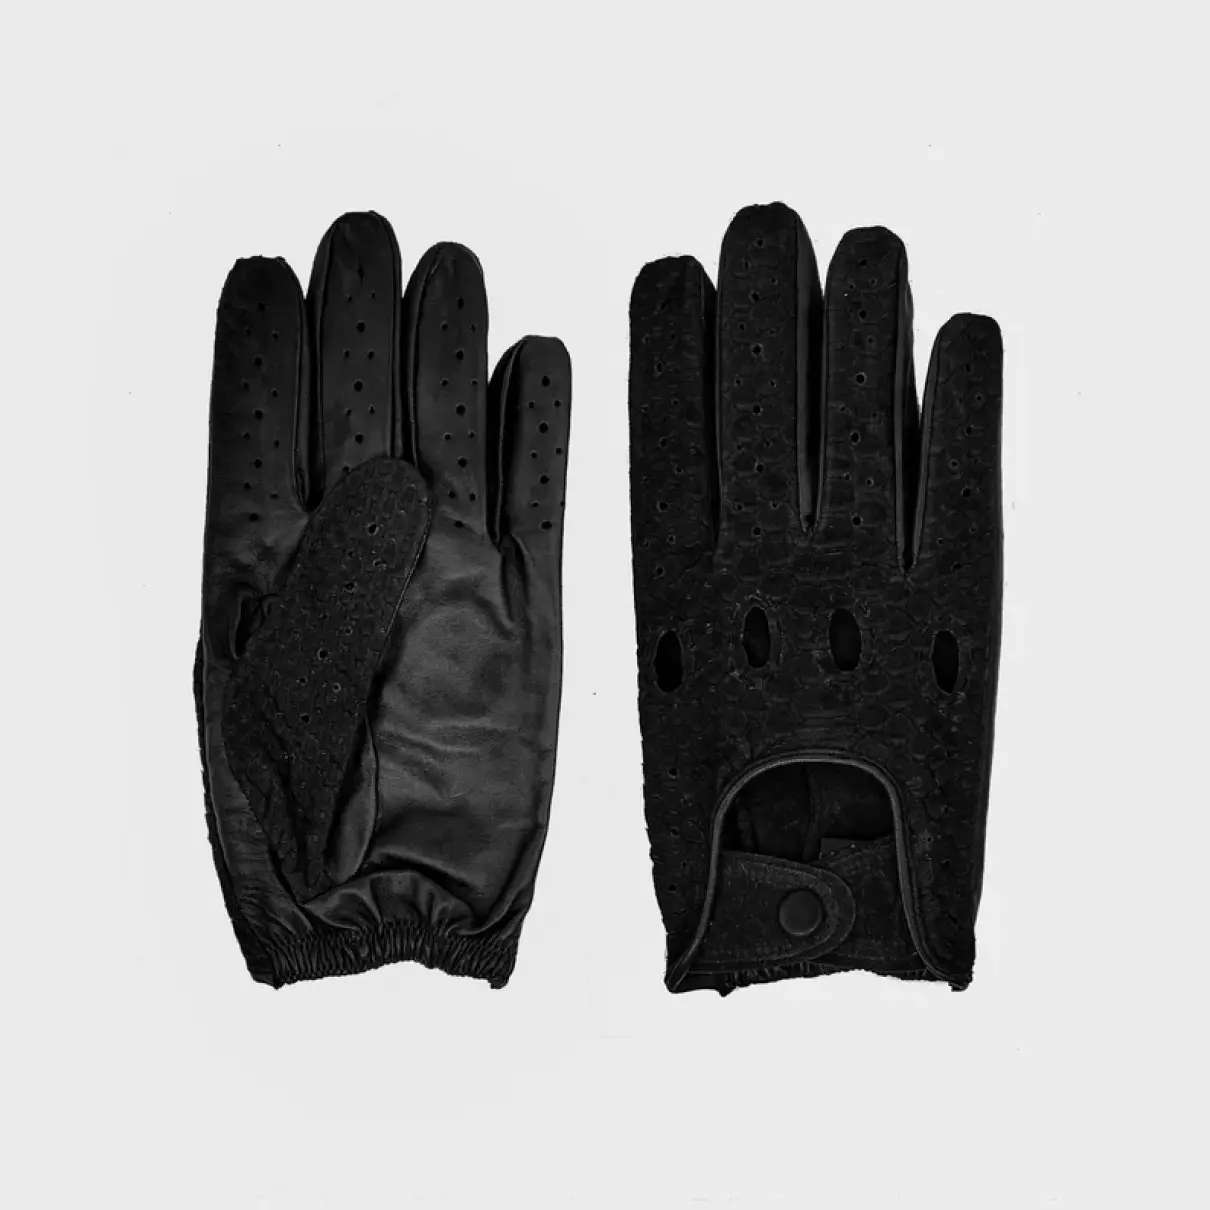 Luxury Prototipo Gloves Men